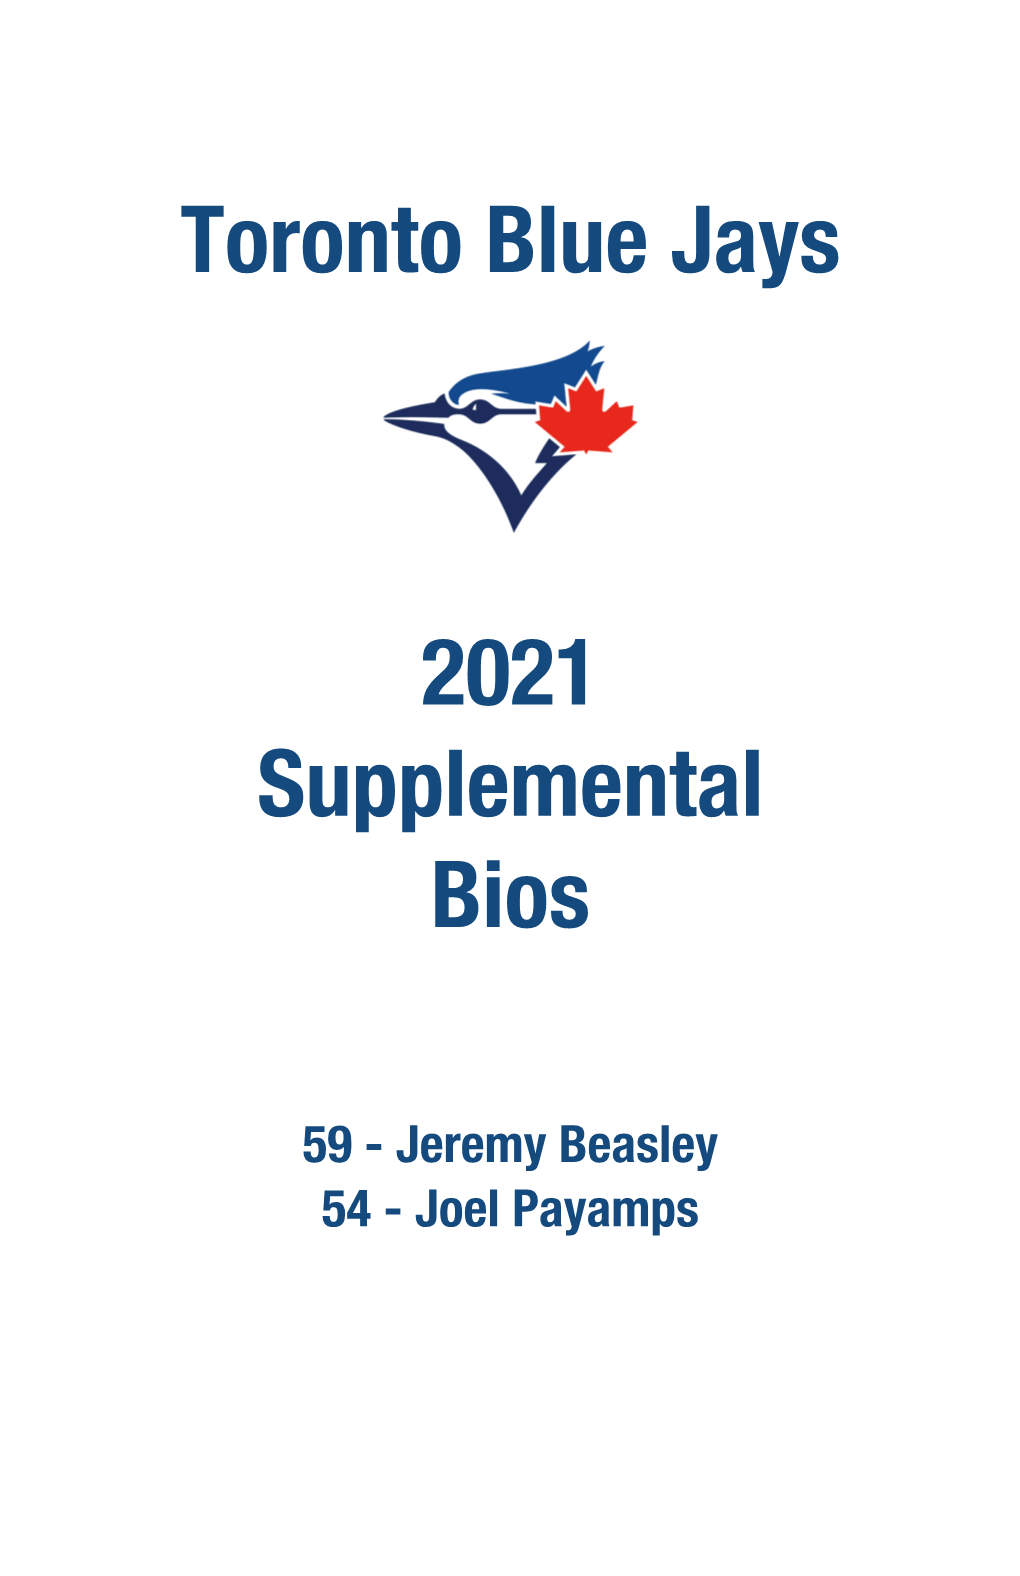 Toronto Blue Jays 2021 Supplemental Bios